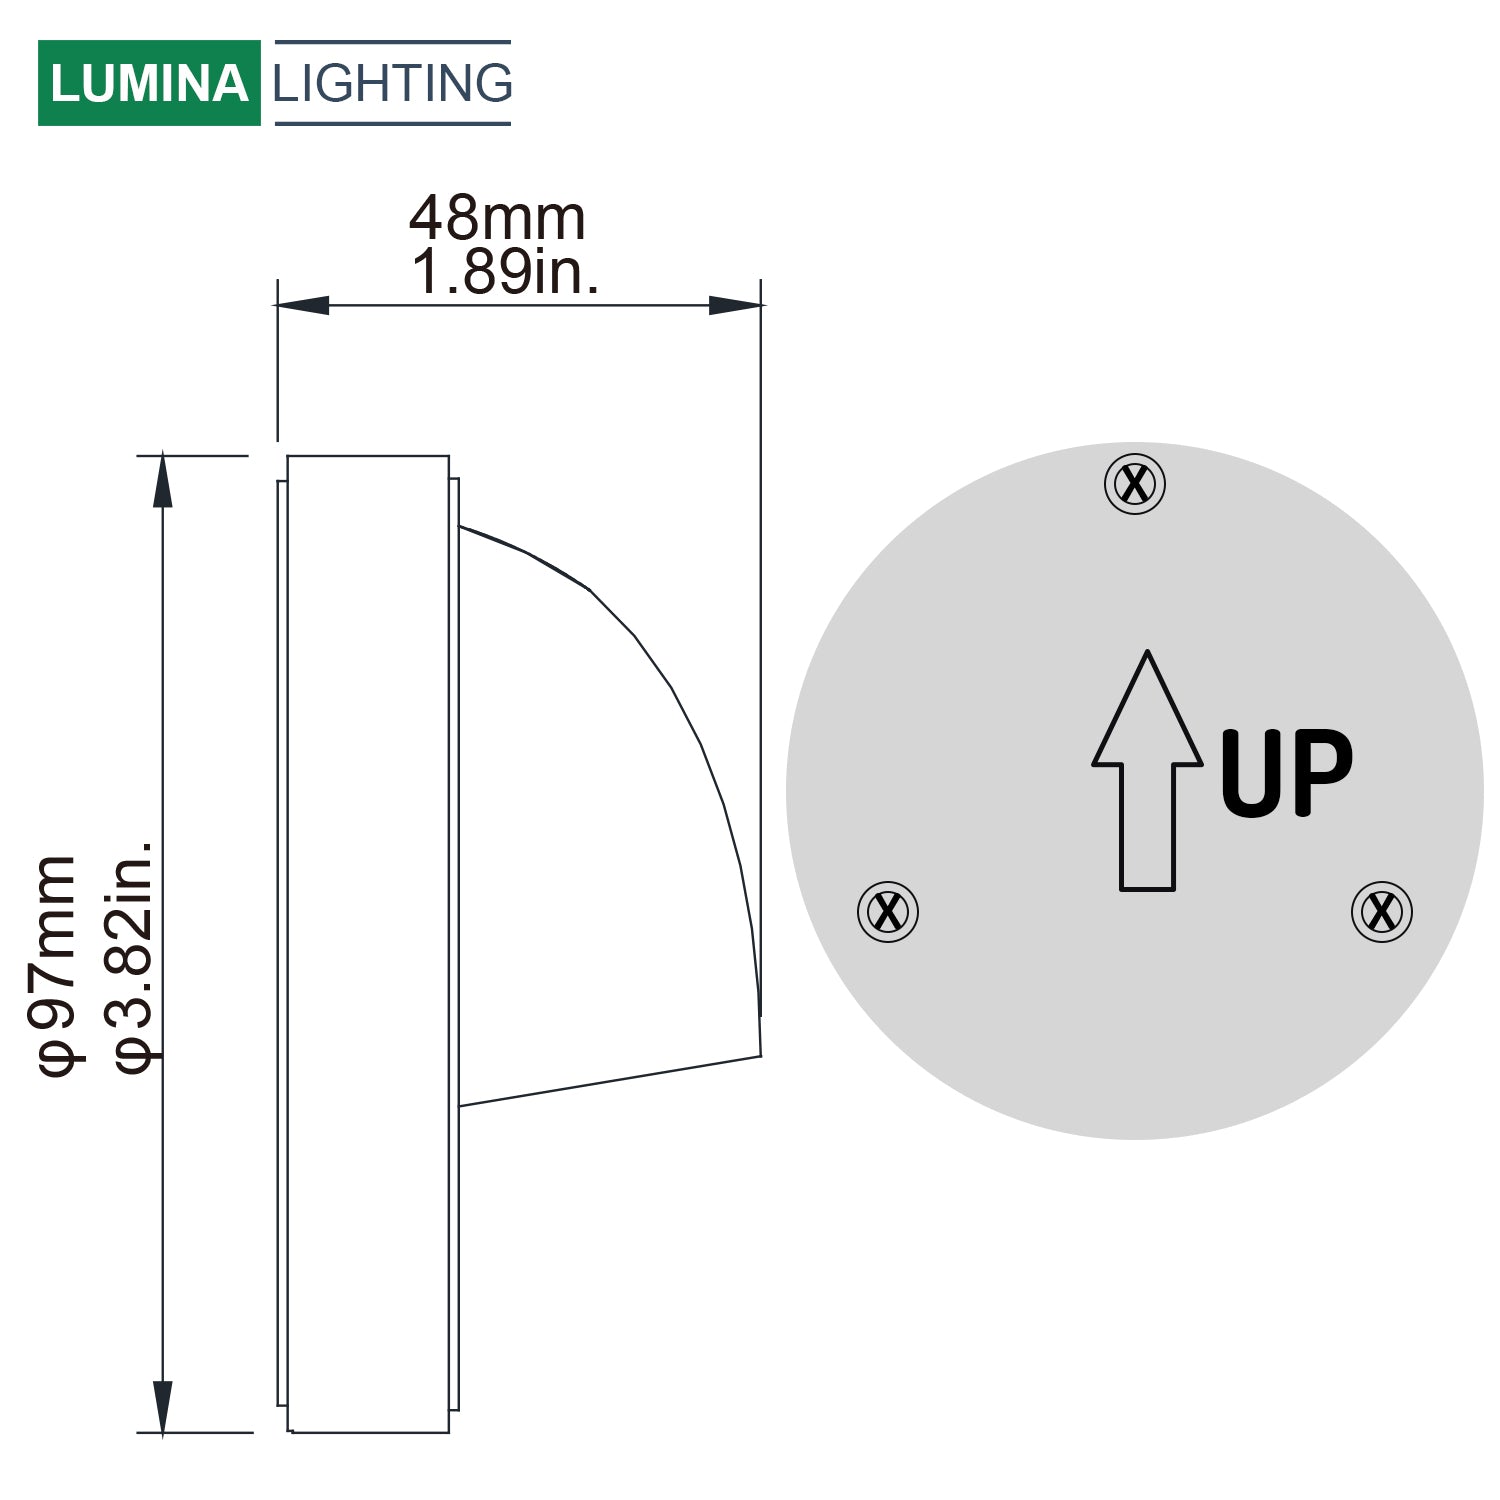 Lumina Lighting® 2W LED Landscape Deck Lights | Low Voltage Landscape Lighting | Deck Lighting - 12V 3000K | Replaceable G4 LED Bulb (Black, 2-Pack)